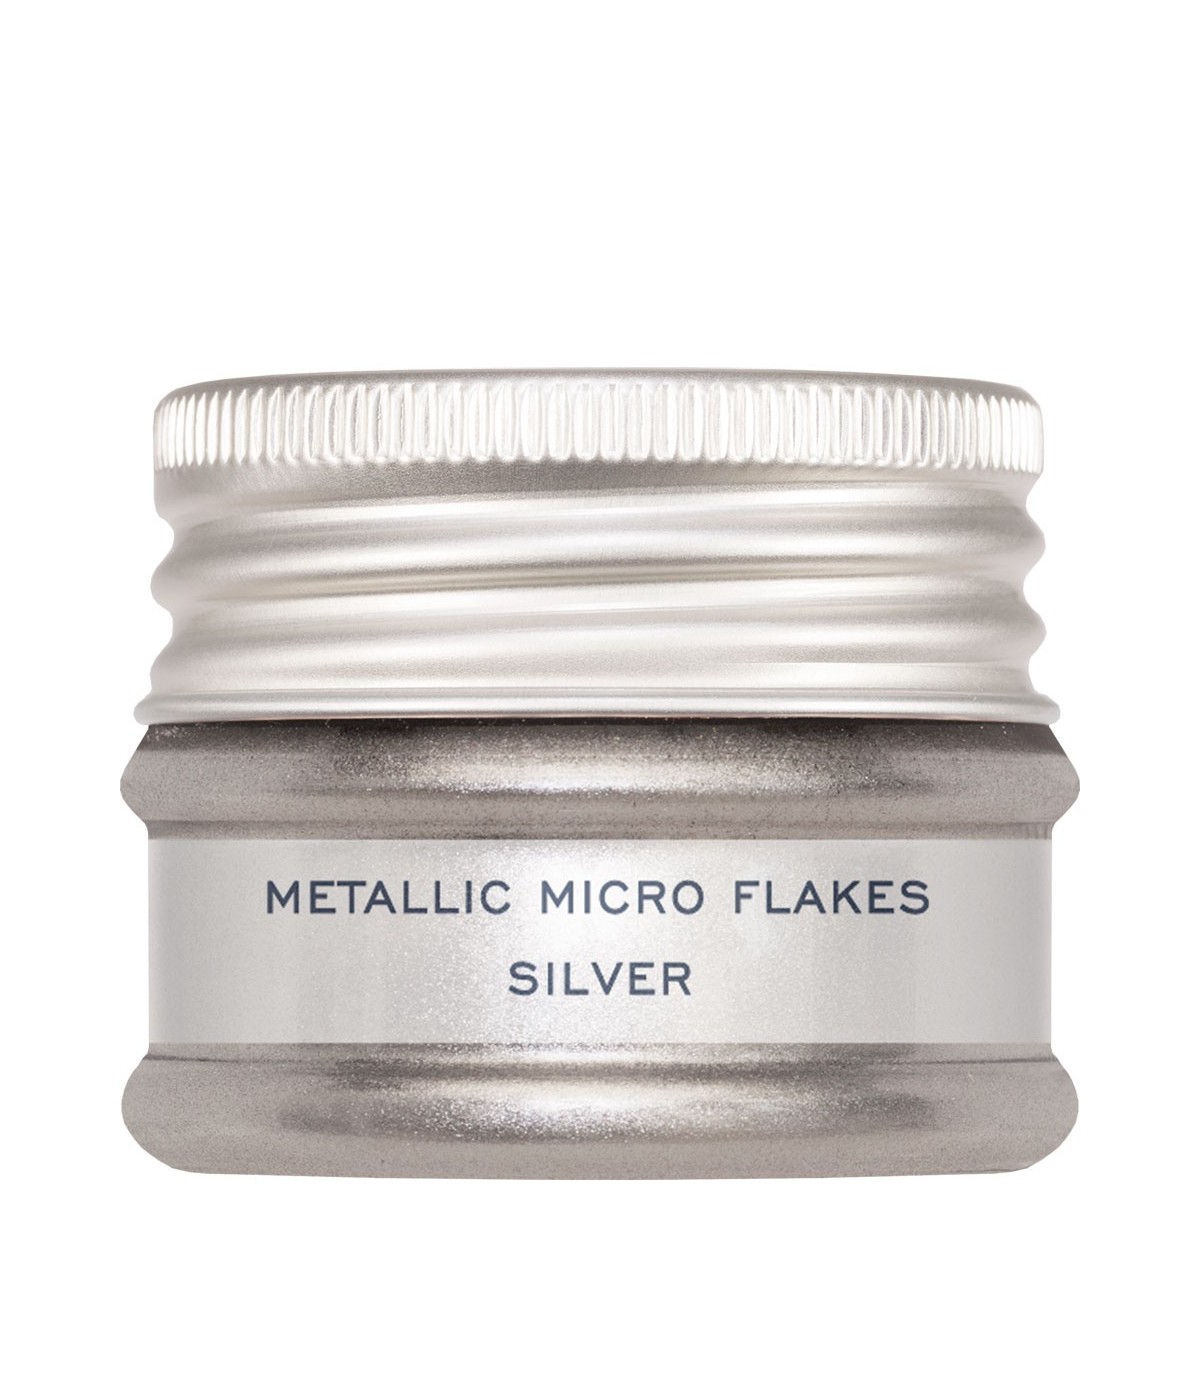 Kryolan Metallic Micro Flakes, 7g